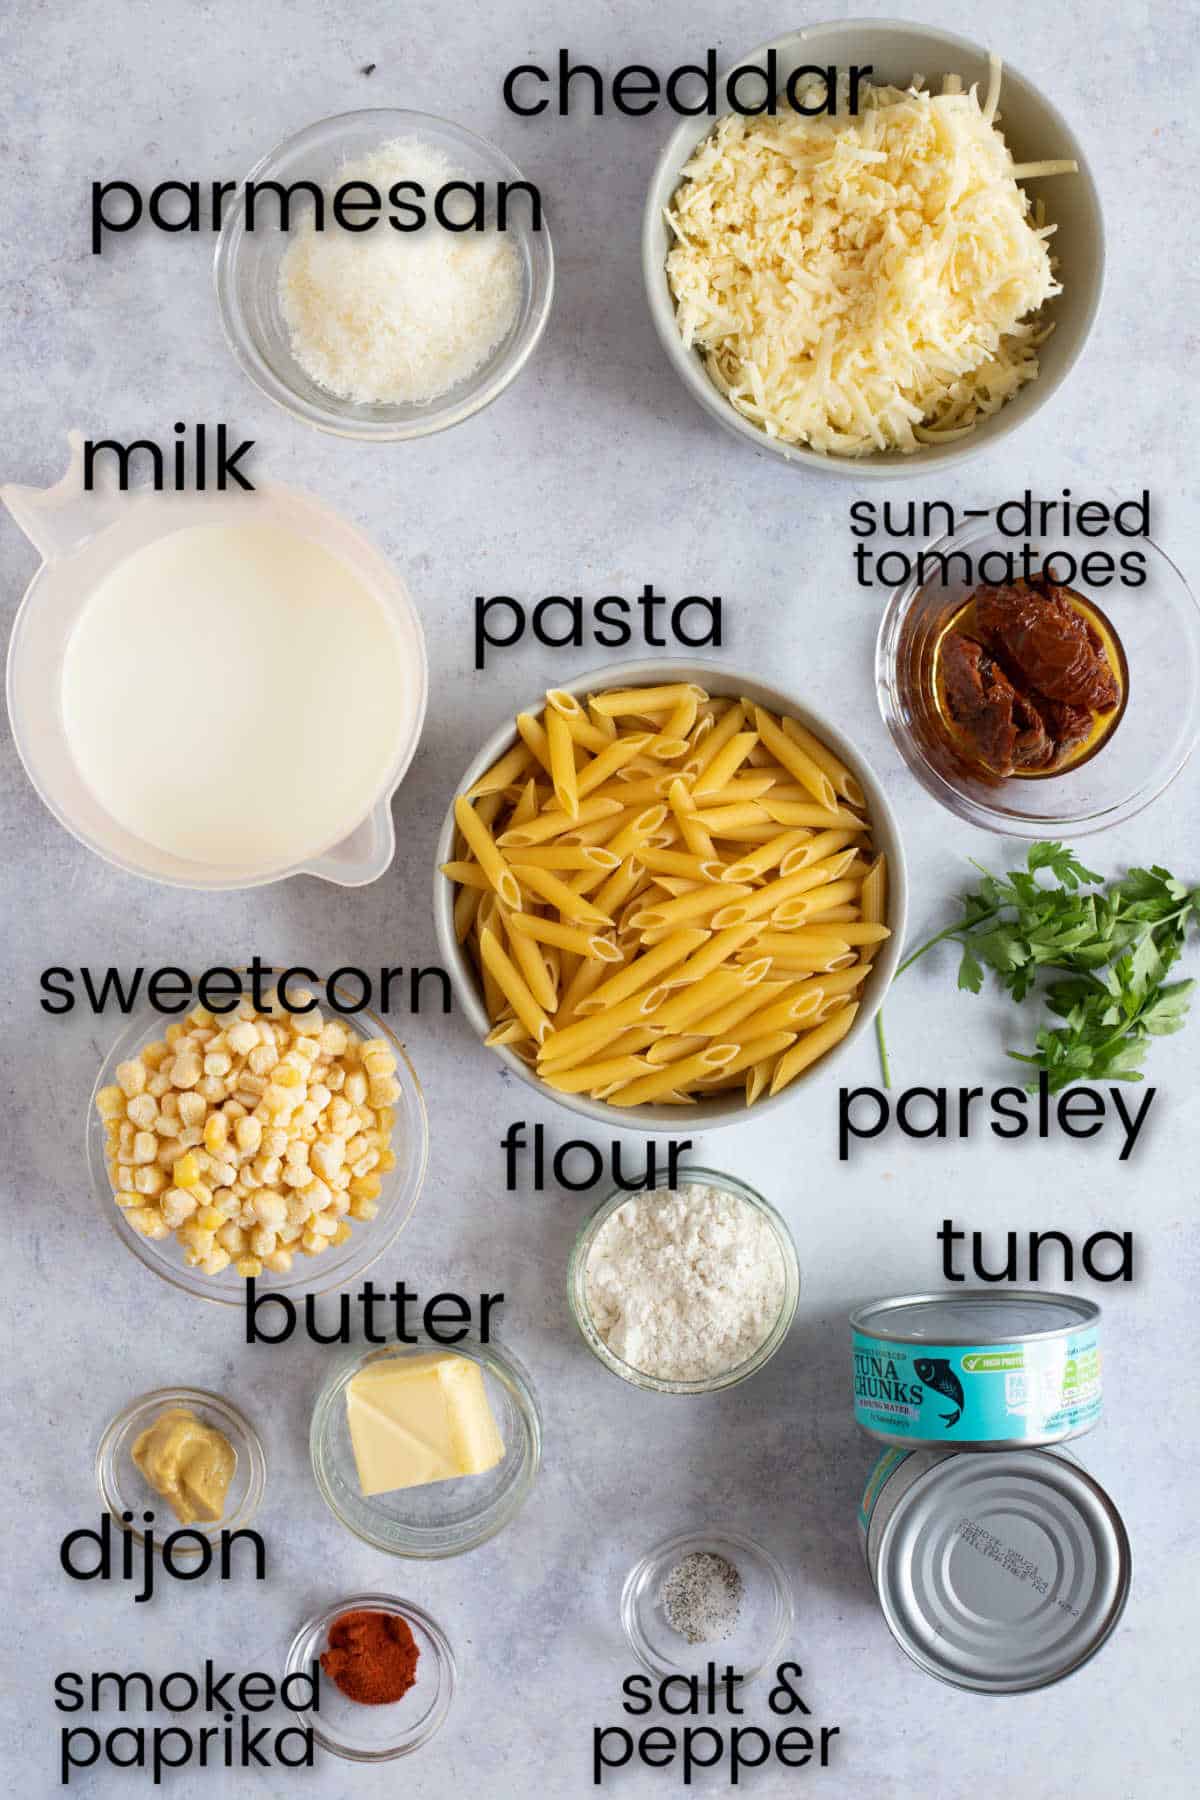 Ingredients for tuna pasta bake.